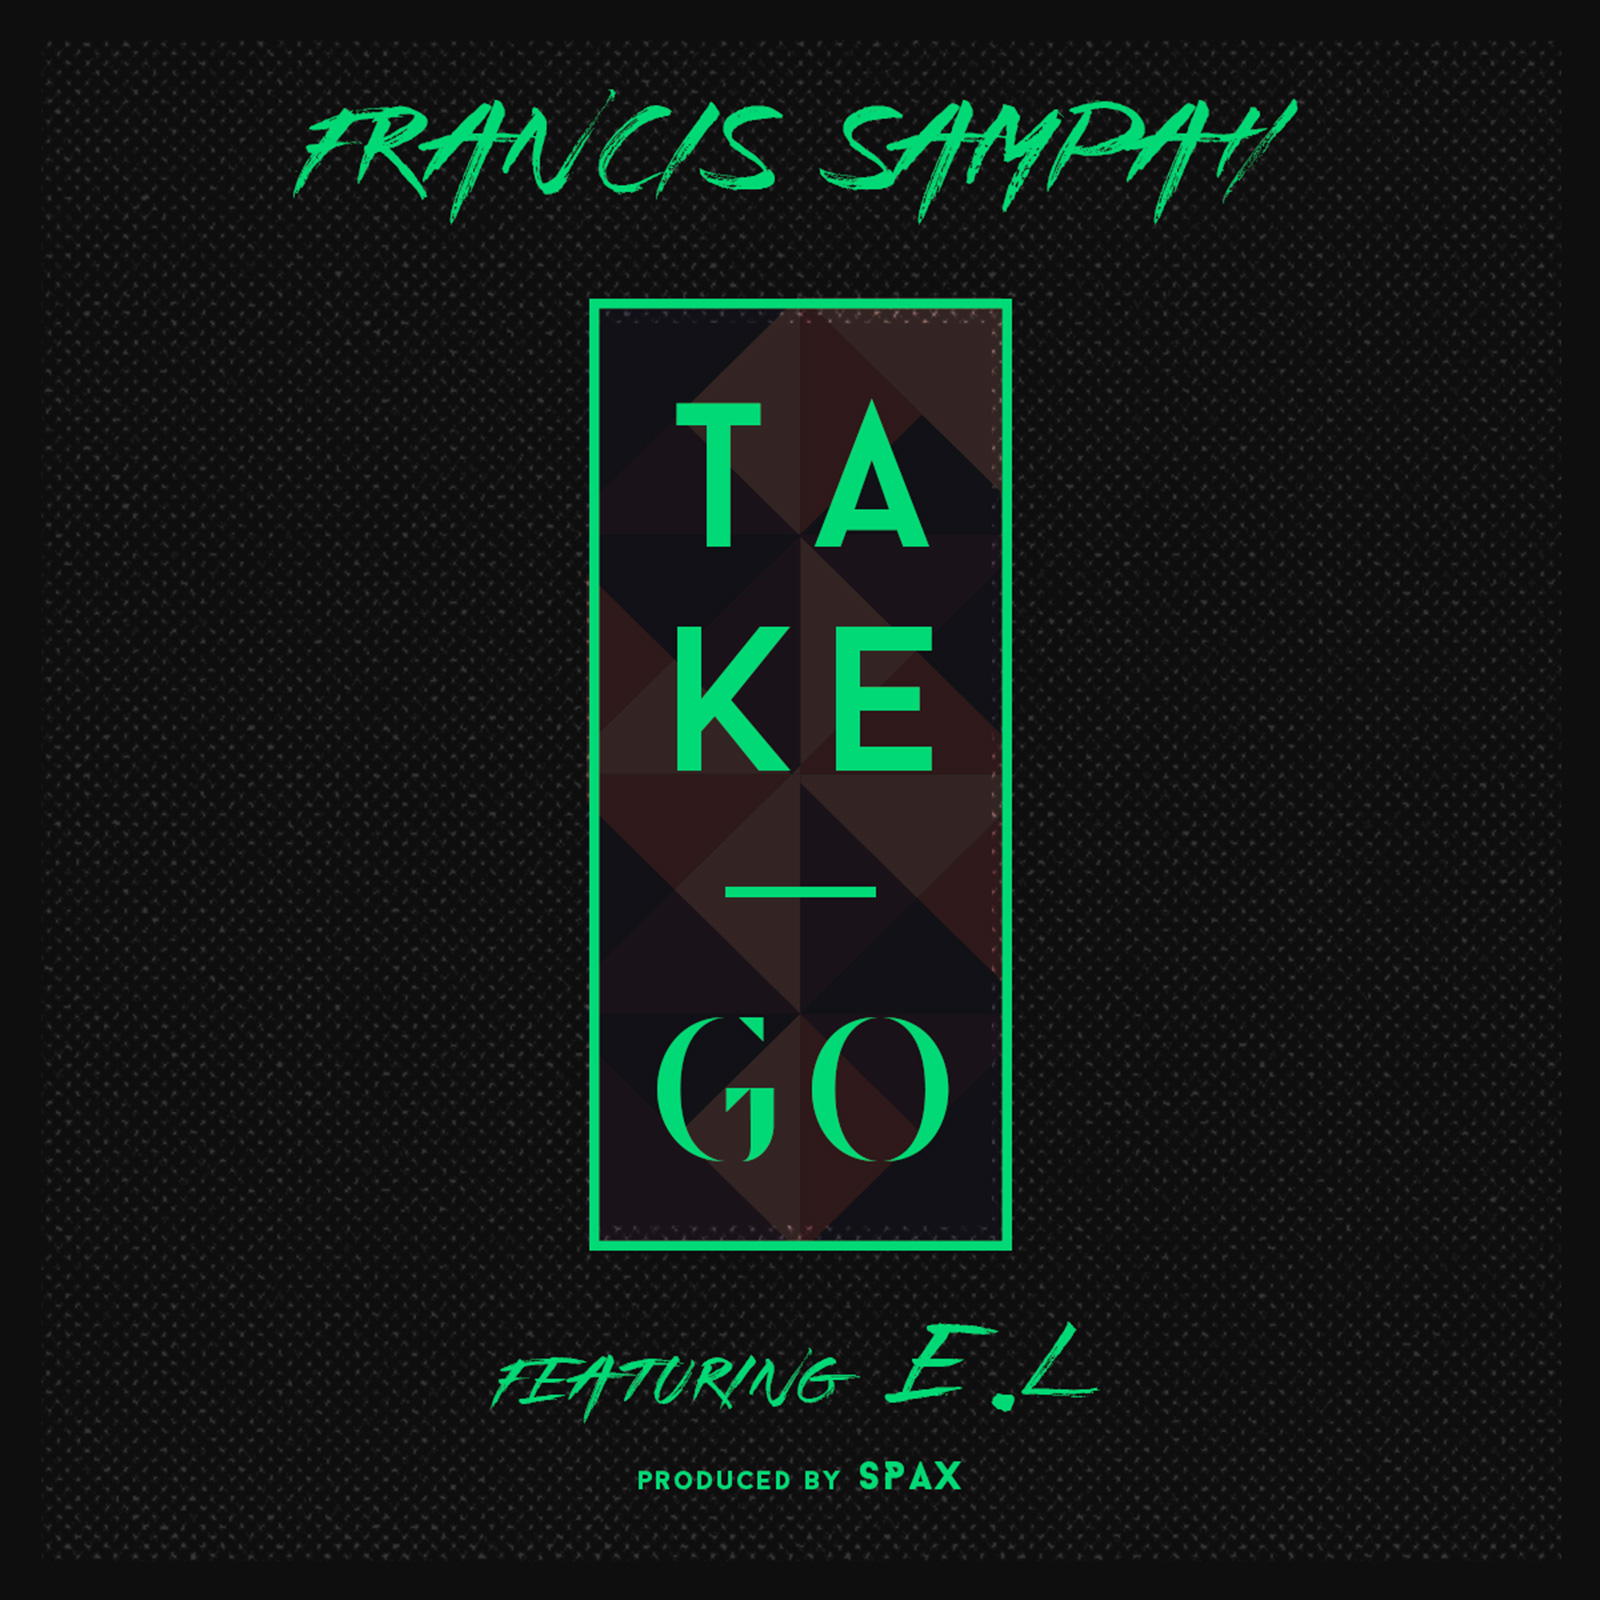 Take Go by Francis Sampah feat. EL